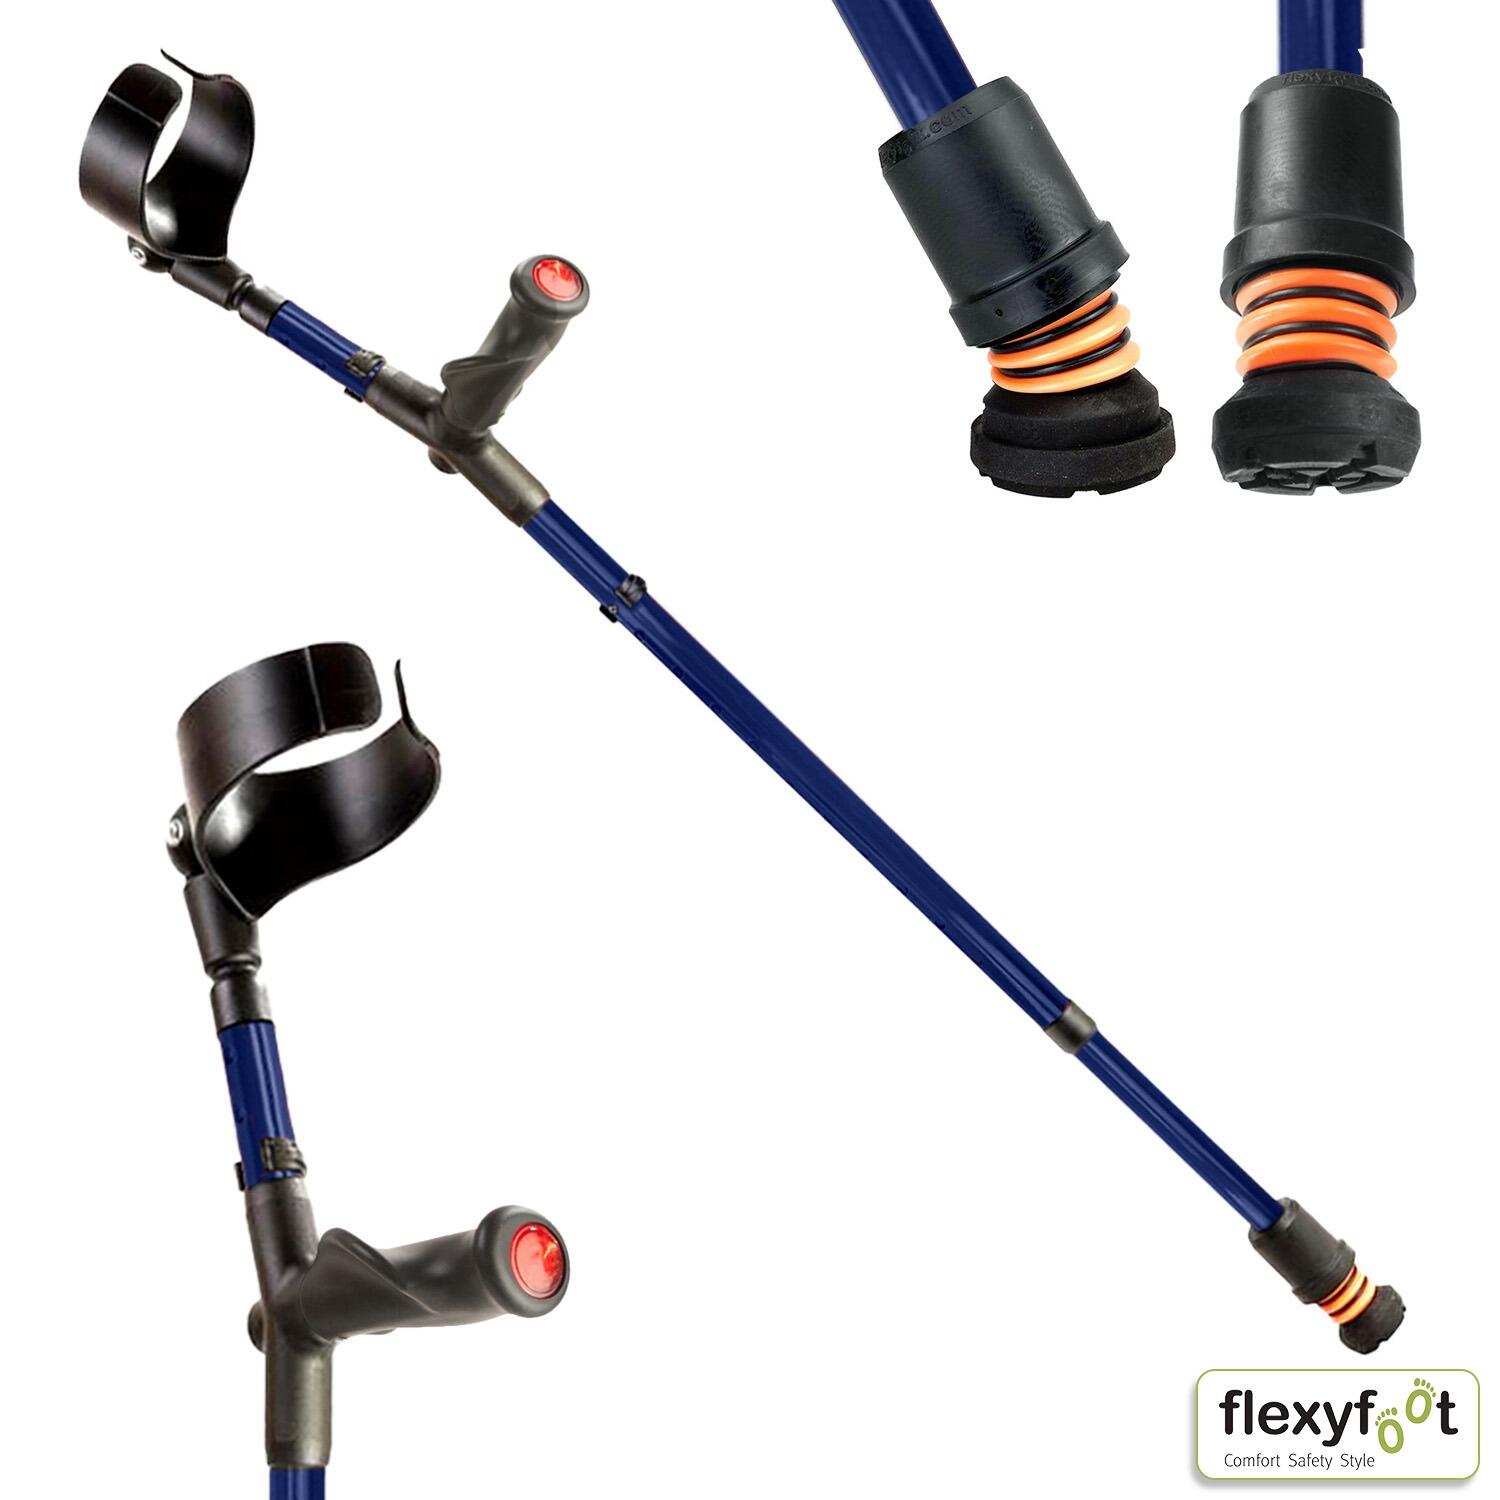 A single Left blue Flexyfoot Comfort Grip Double Adjustable Crutch